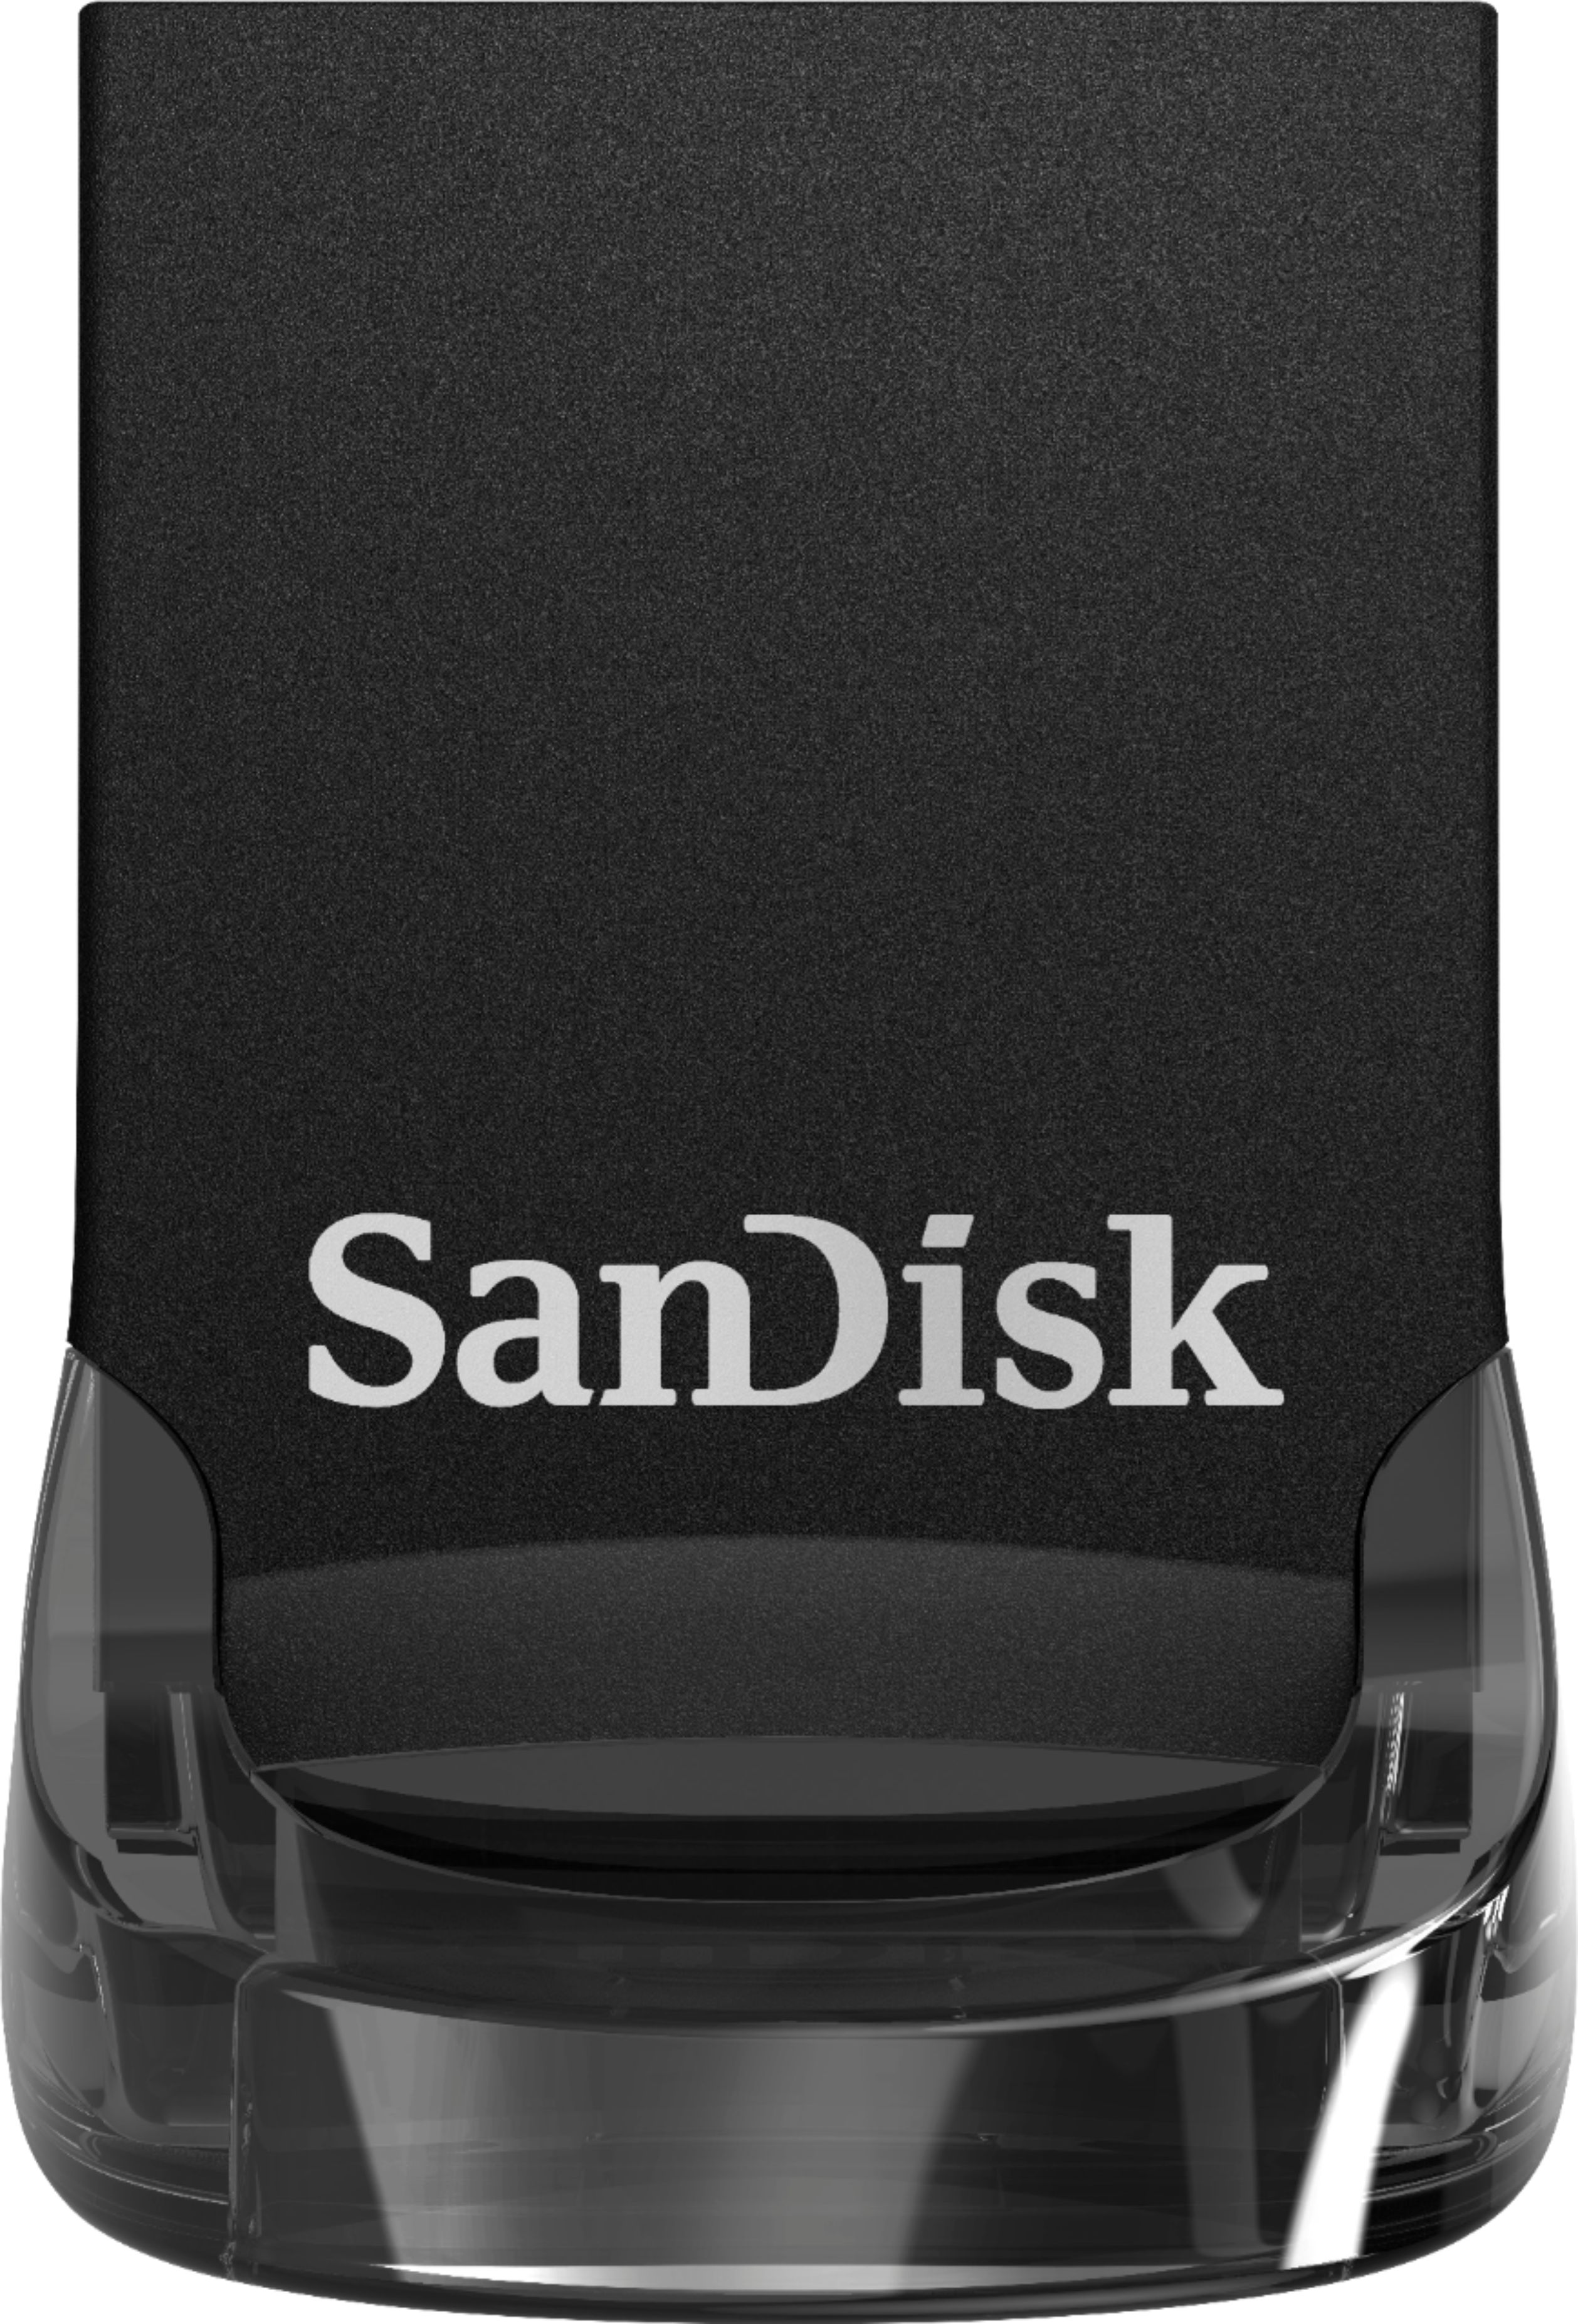 SanDisk 256GB Ultra Fit USB 3.1 Flash Drive SDCZ430-256G-A46